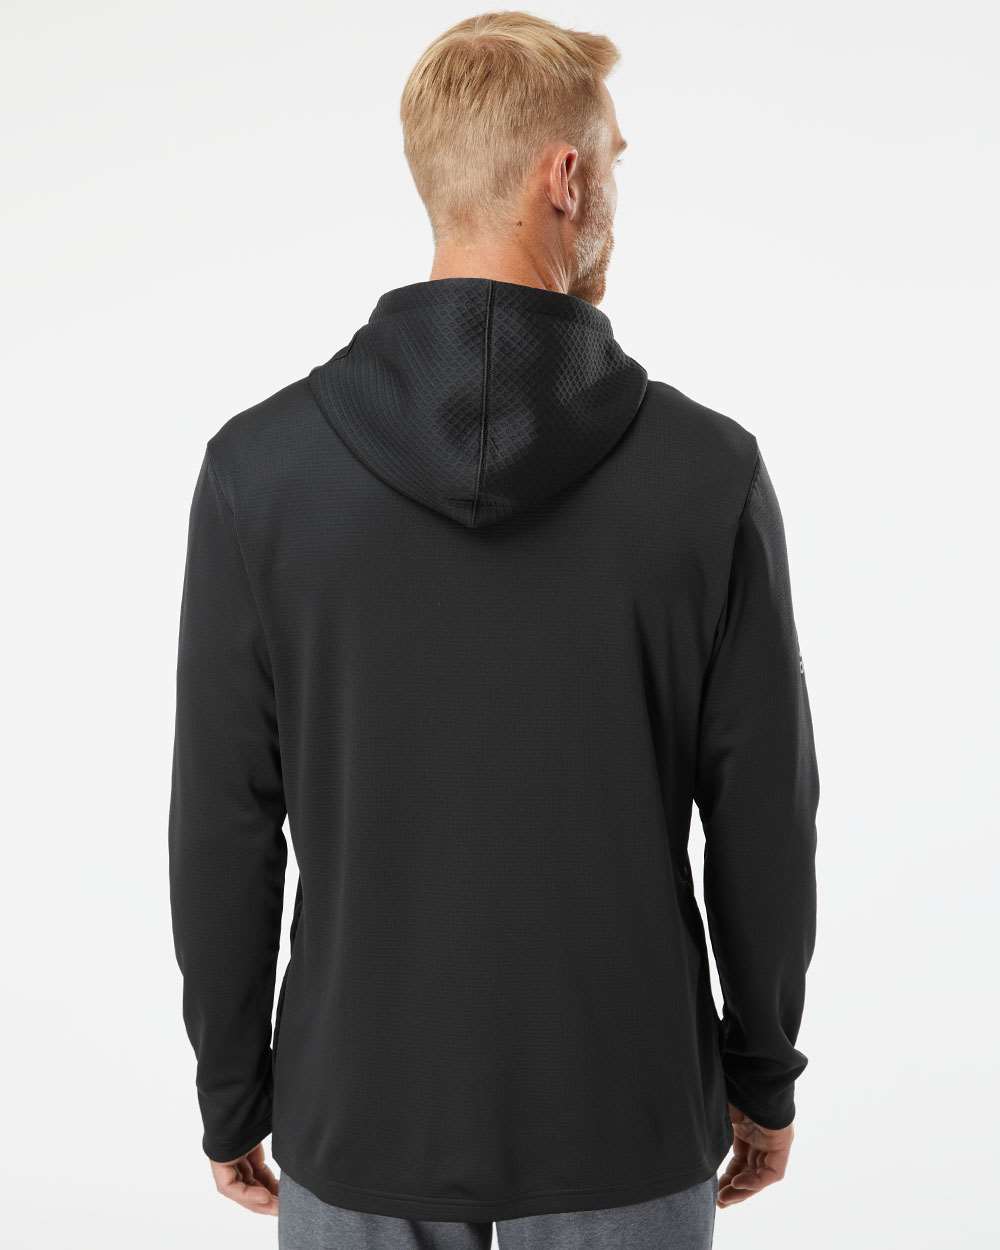 Adidas A530 Textured Mixed Media Hooded Sweatshirt #colormdl_Black